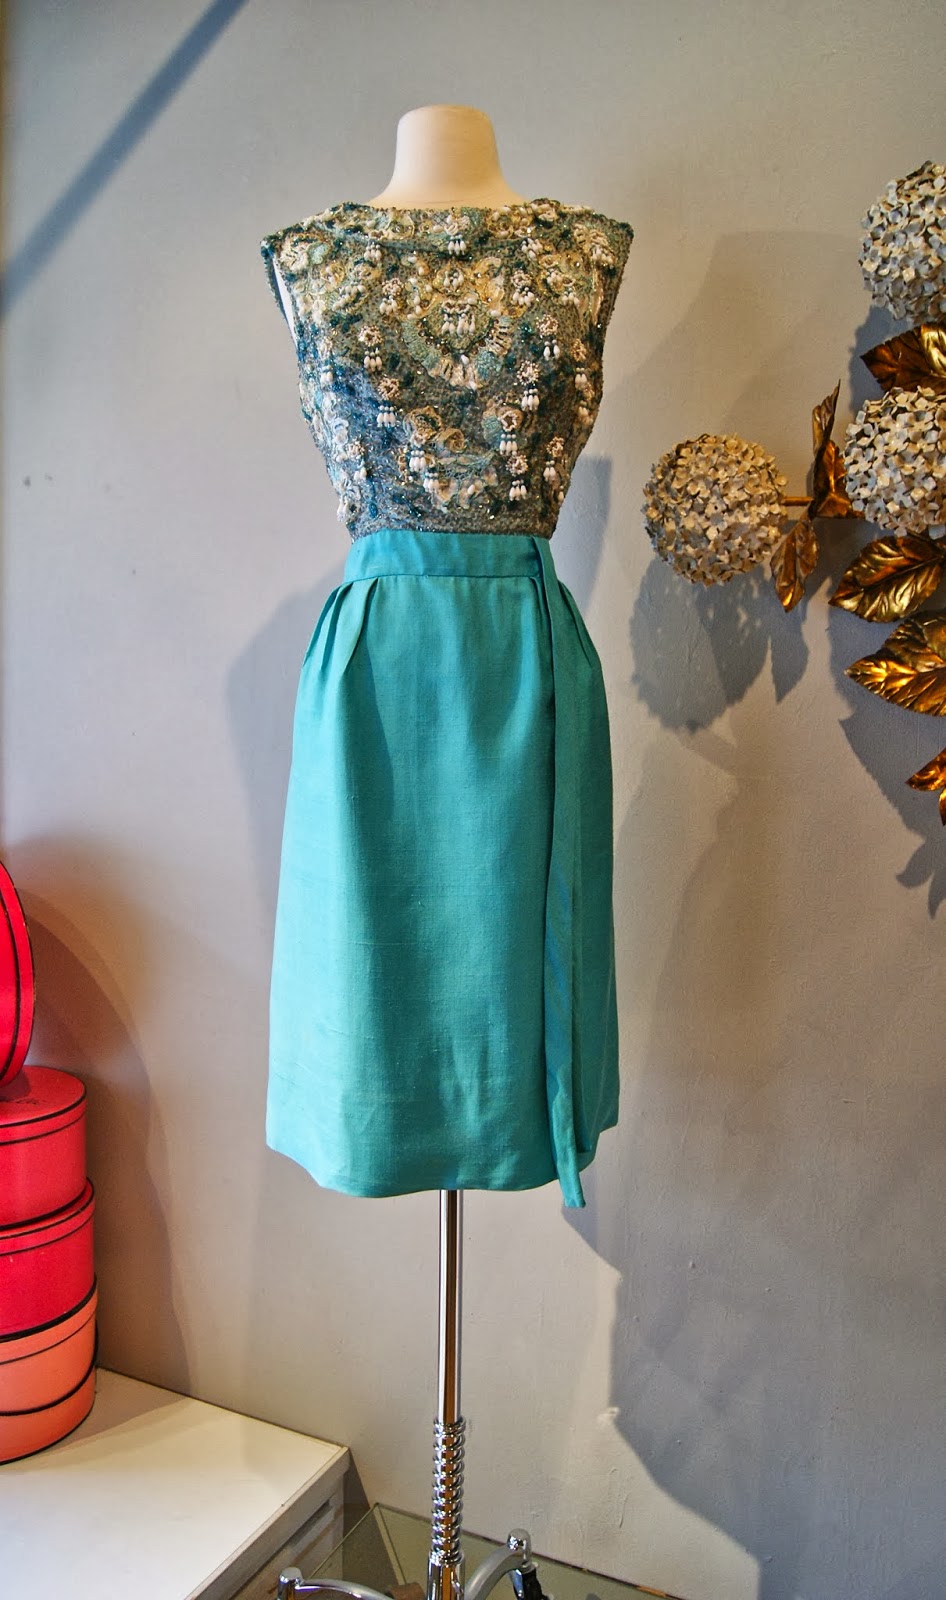 Xtabay Vintage Clothing Boutique - Portland, Oregon: New Arrivals: My ...